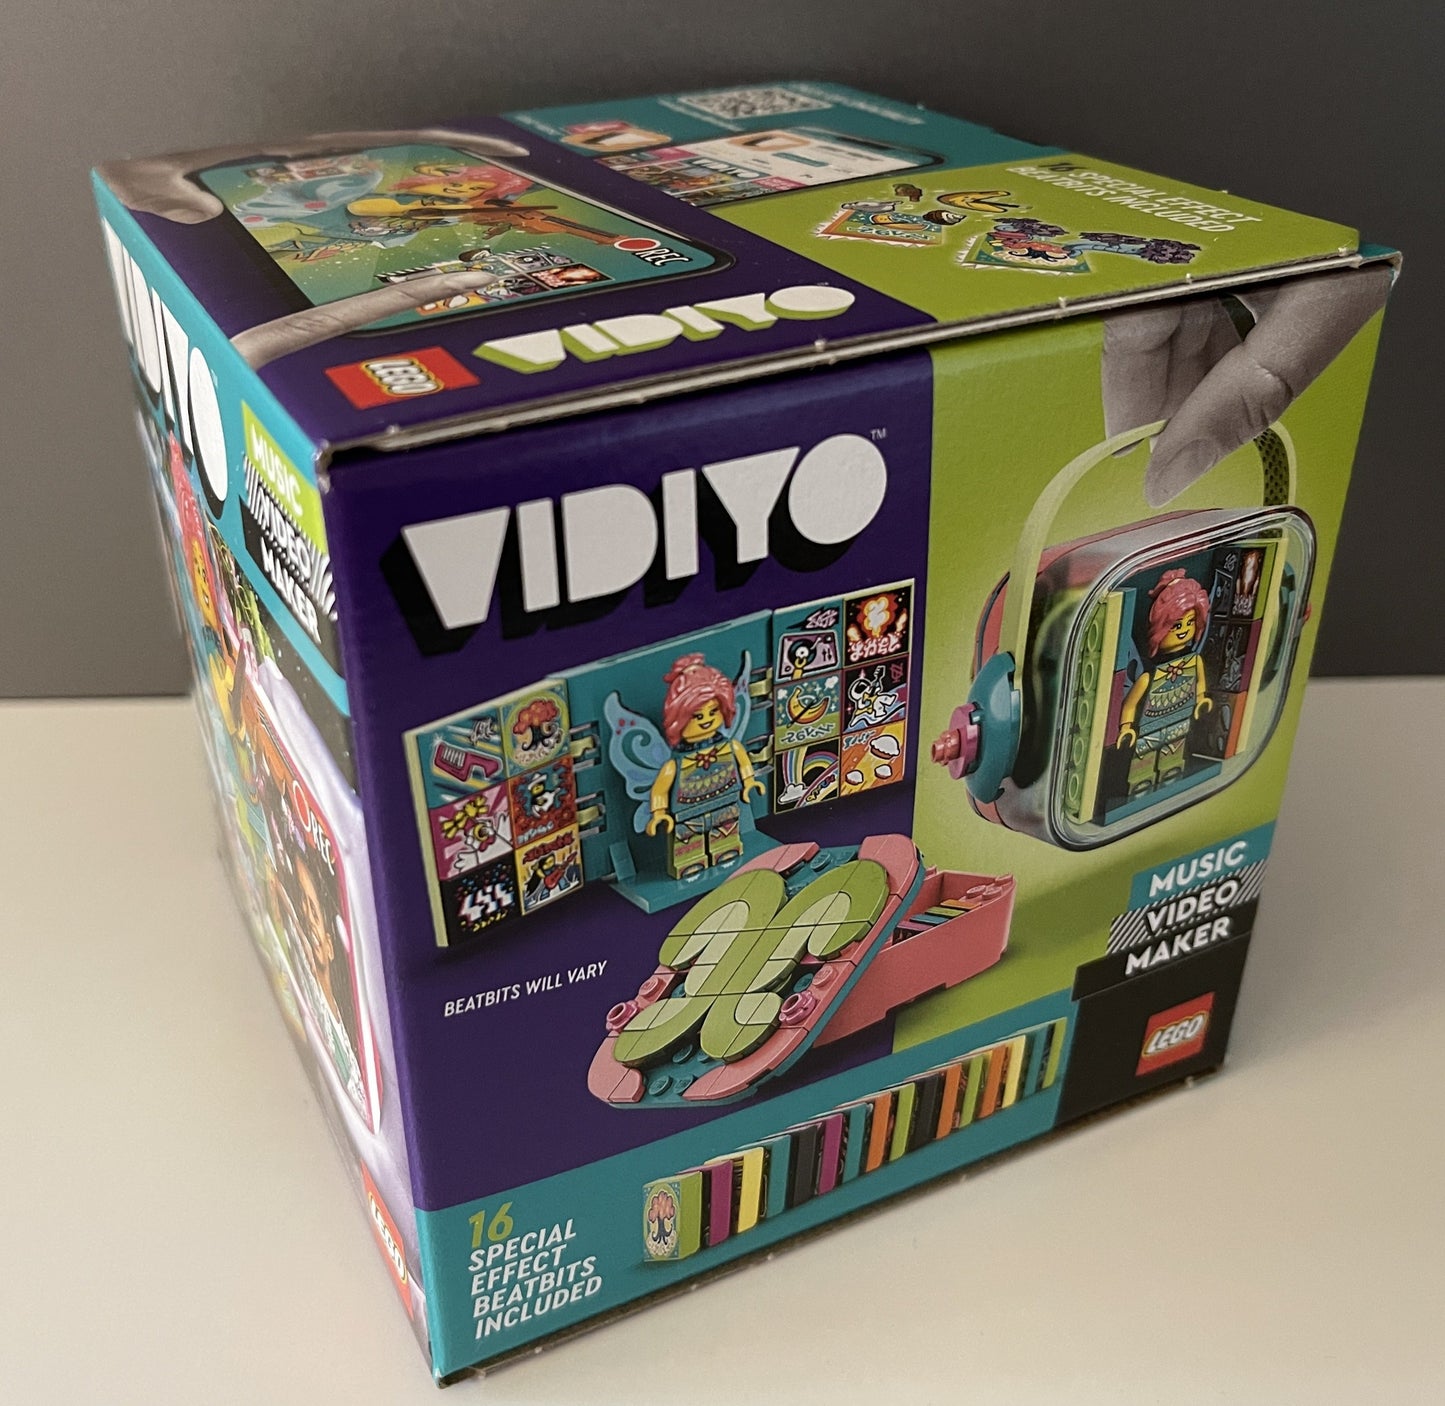 LEGO Vidiyo Folk Fairy Beatbox Music Video Maker (43110) ab 7 Jahren